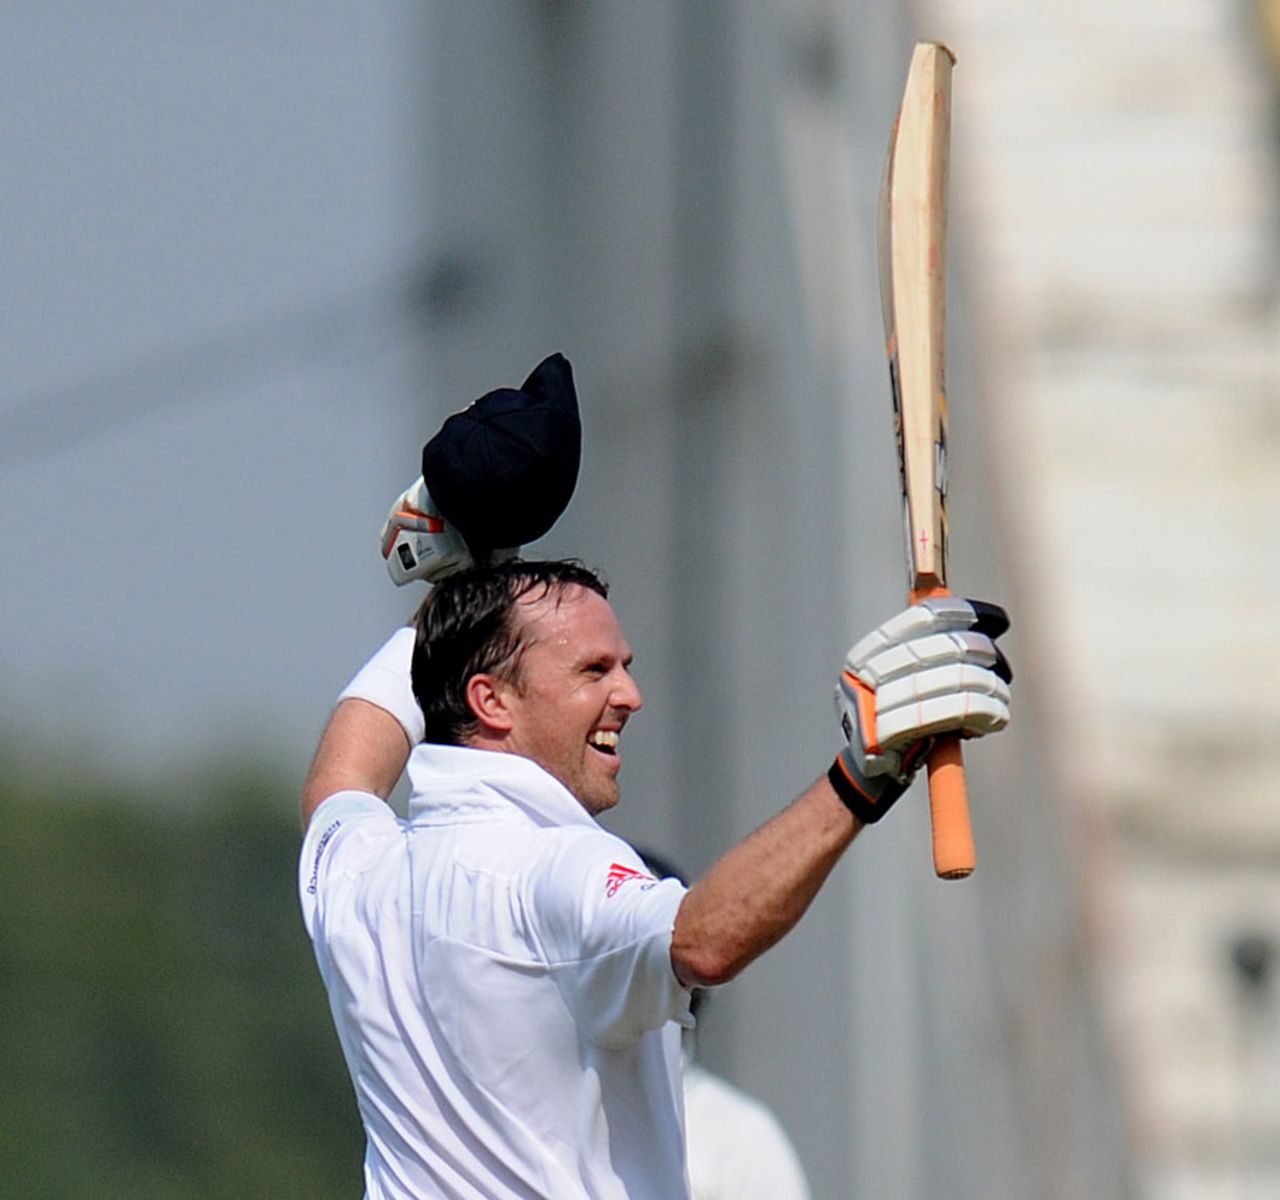 Graeme Swann struck his fifth Test half-century, India v England, 4th Test, Nagpur, 2nd day, December 14, 2012